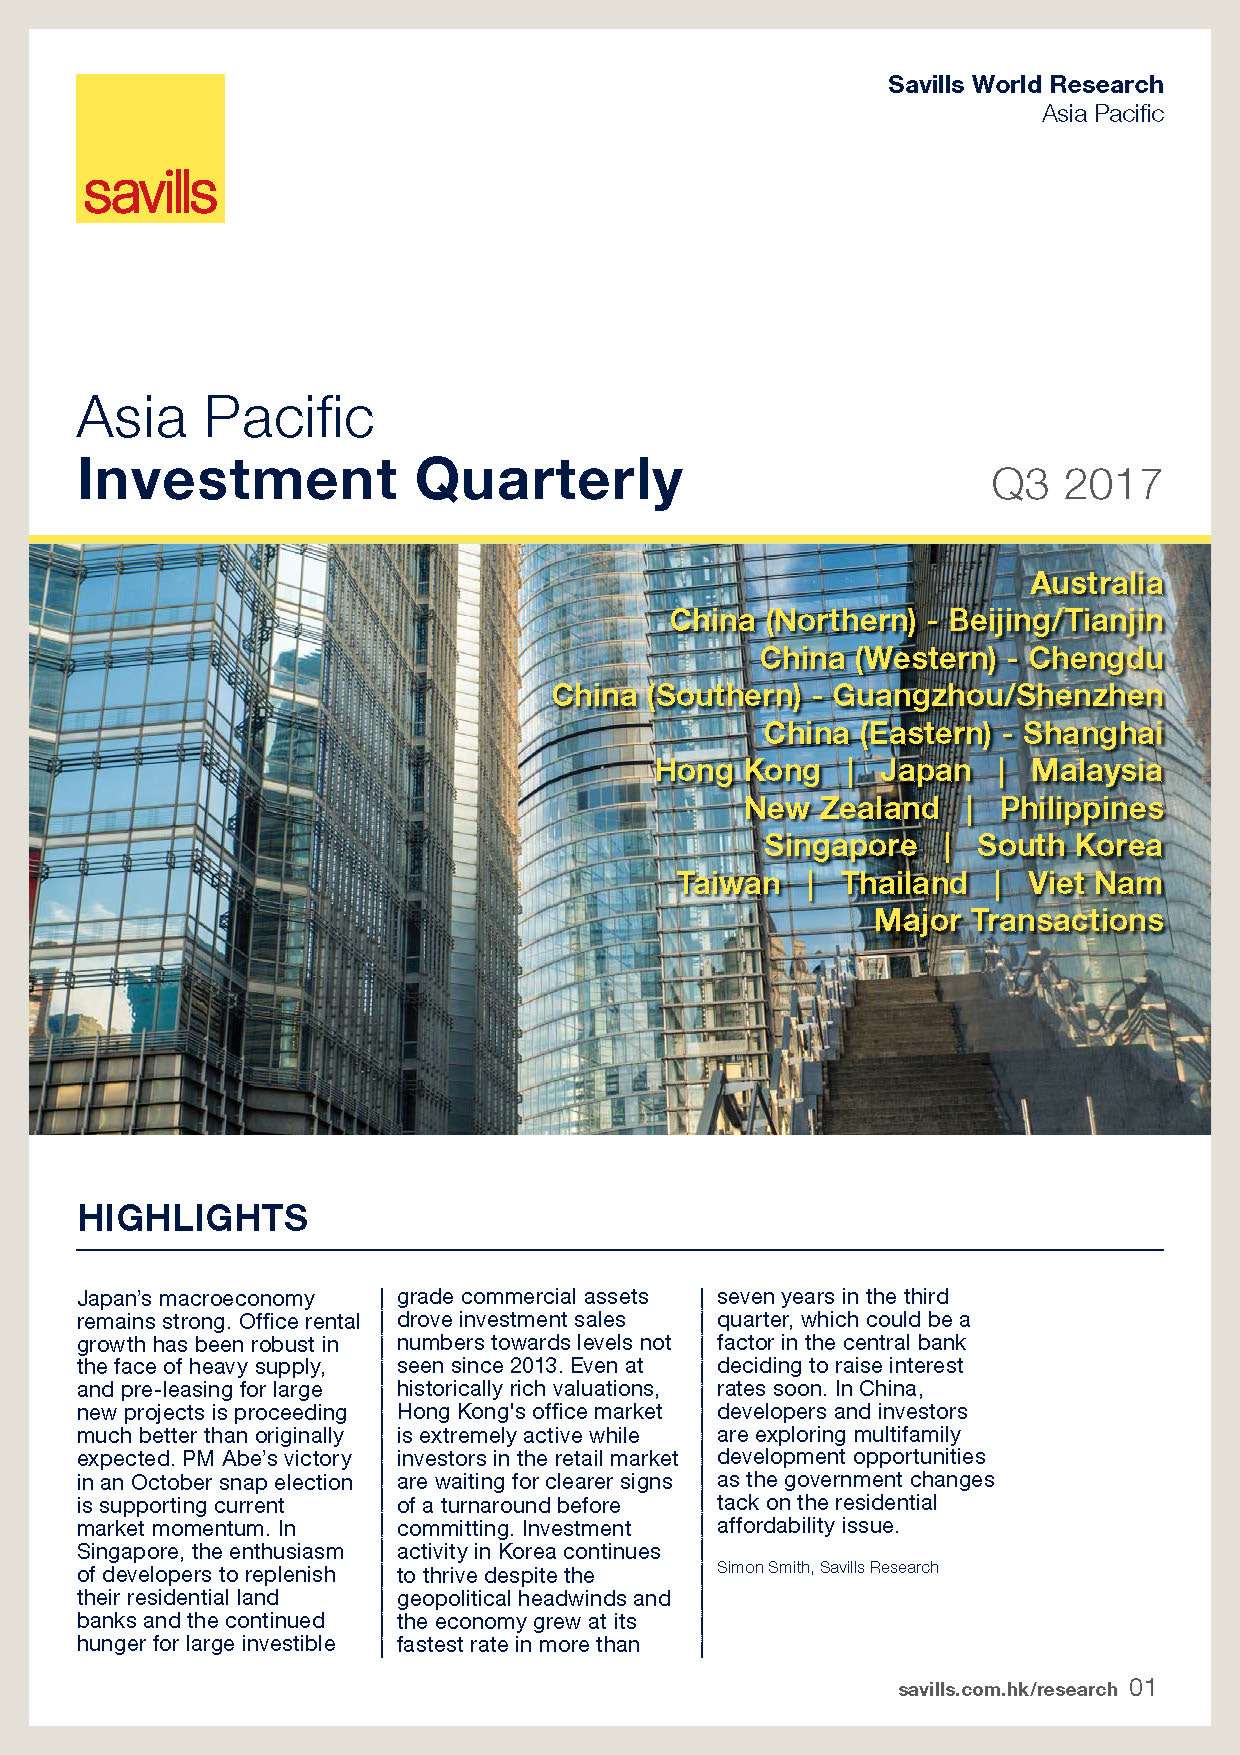 The Asia Pacific Investment Quarterly Q3 2017